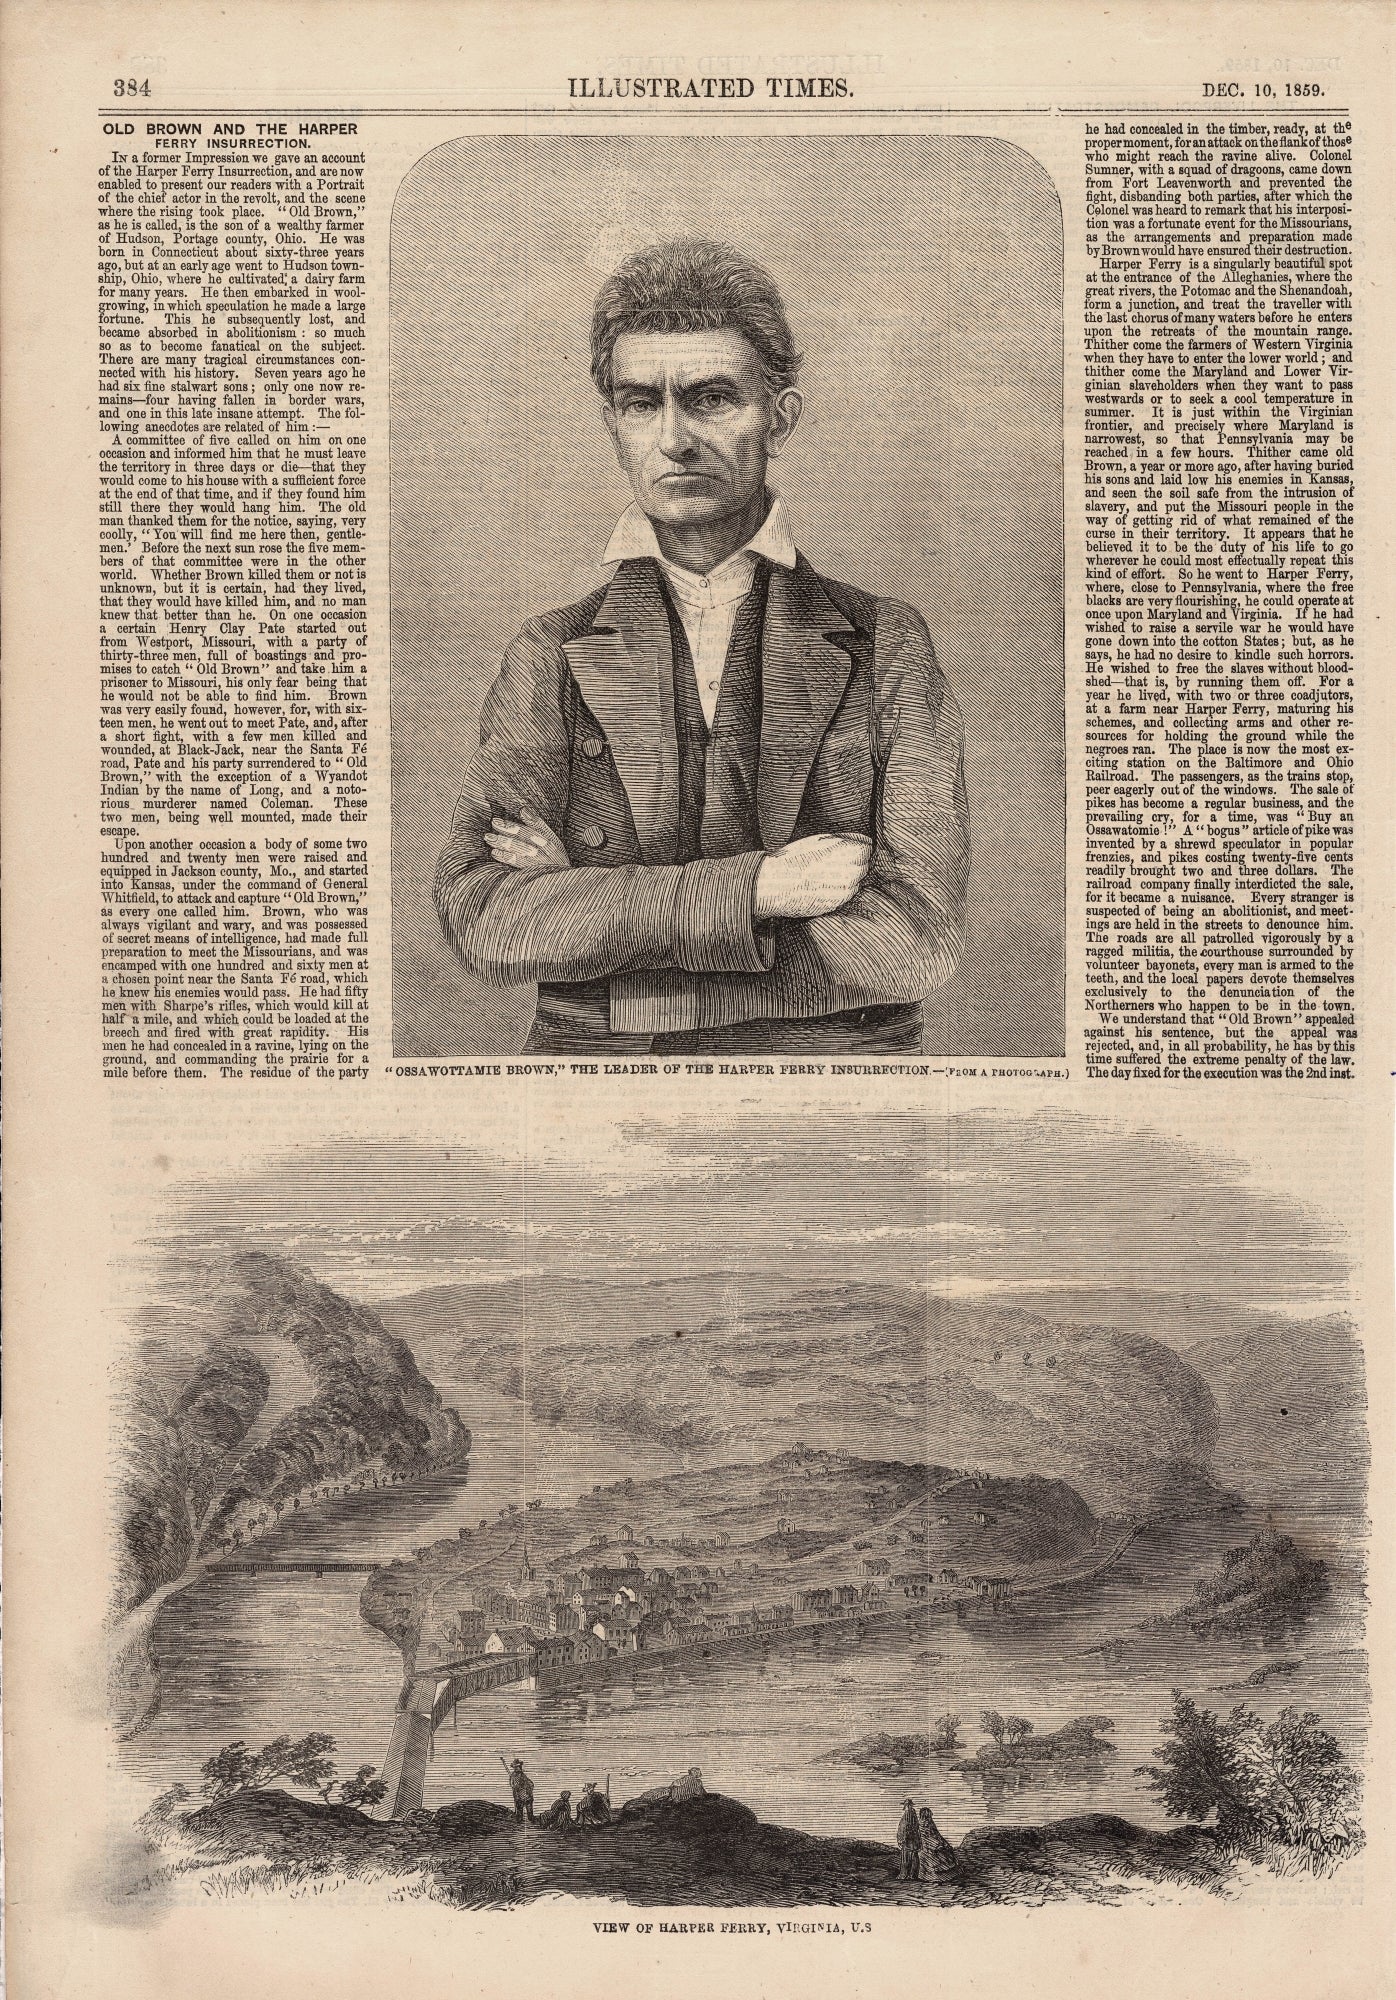 John Brown Harper Ferry report in 'Illustrated Times' newspaper 1859